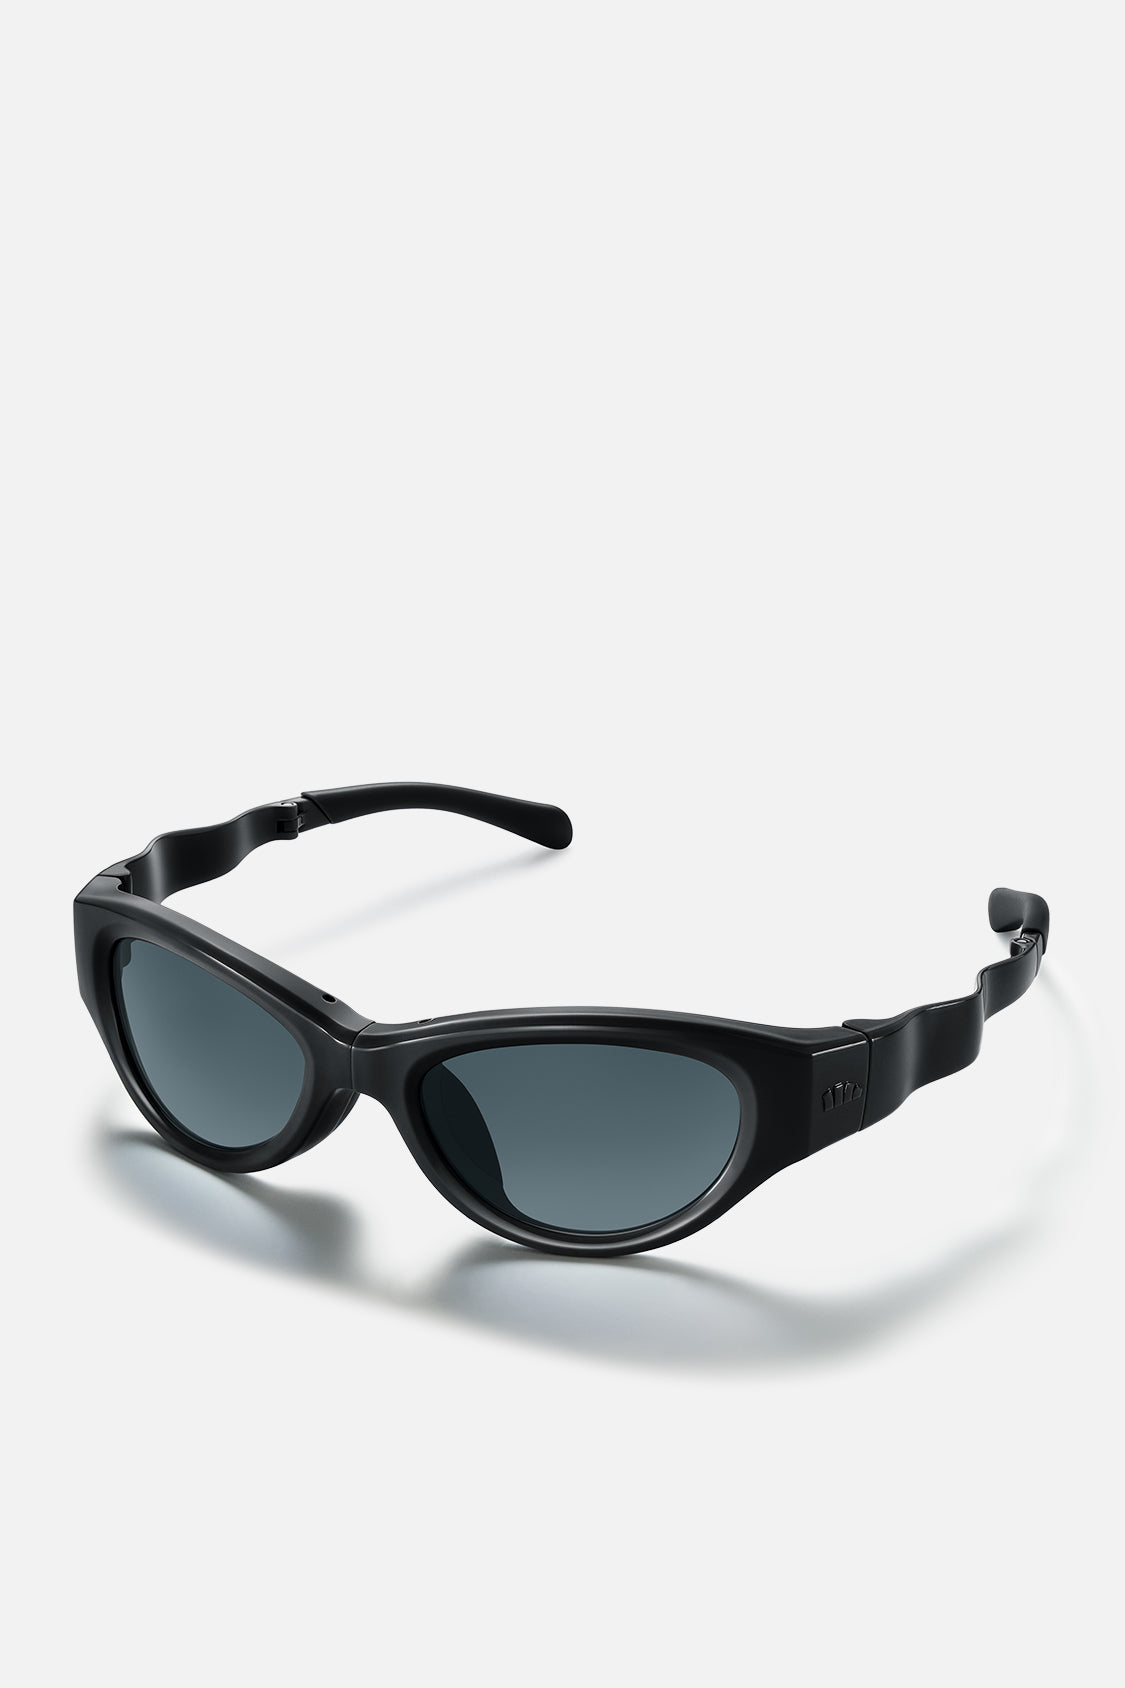 beneunder women's folding sunglasses #color_black